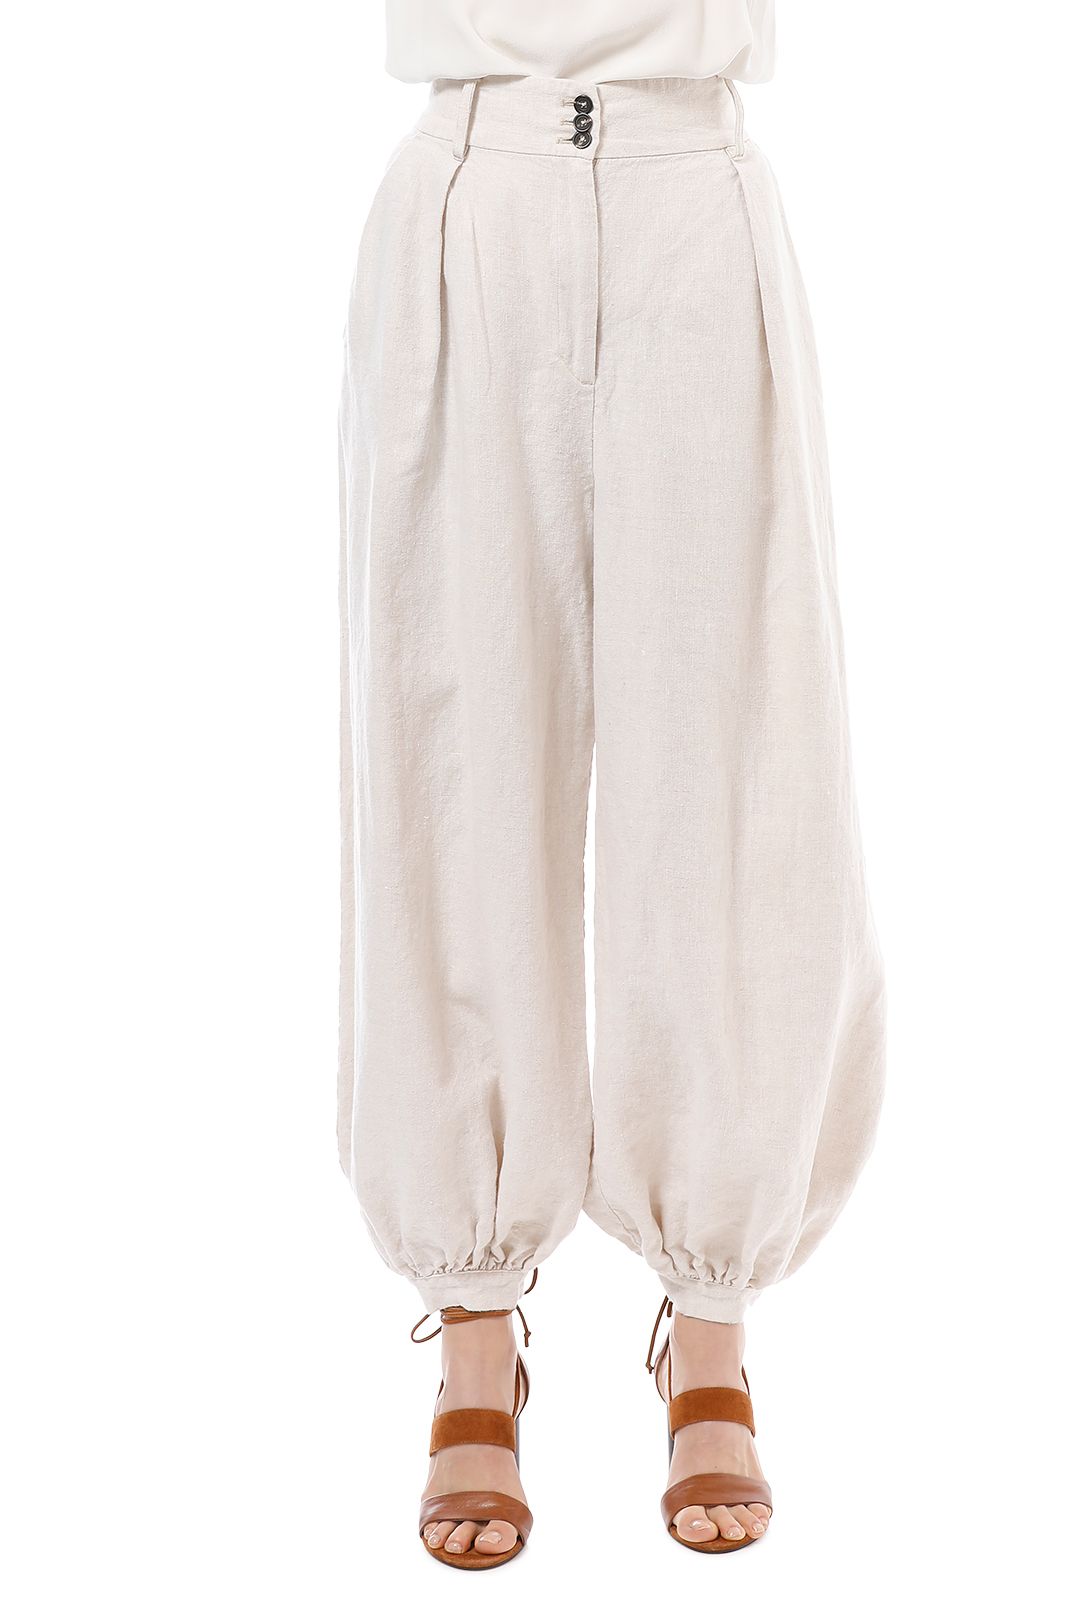 Shona Joy - Linen Tailored Harem Pants with Belt - Natural - Front Detail